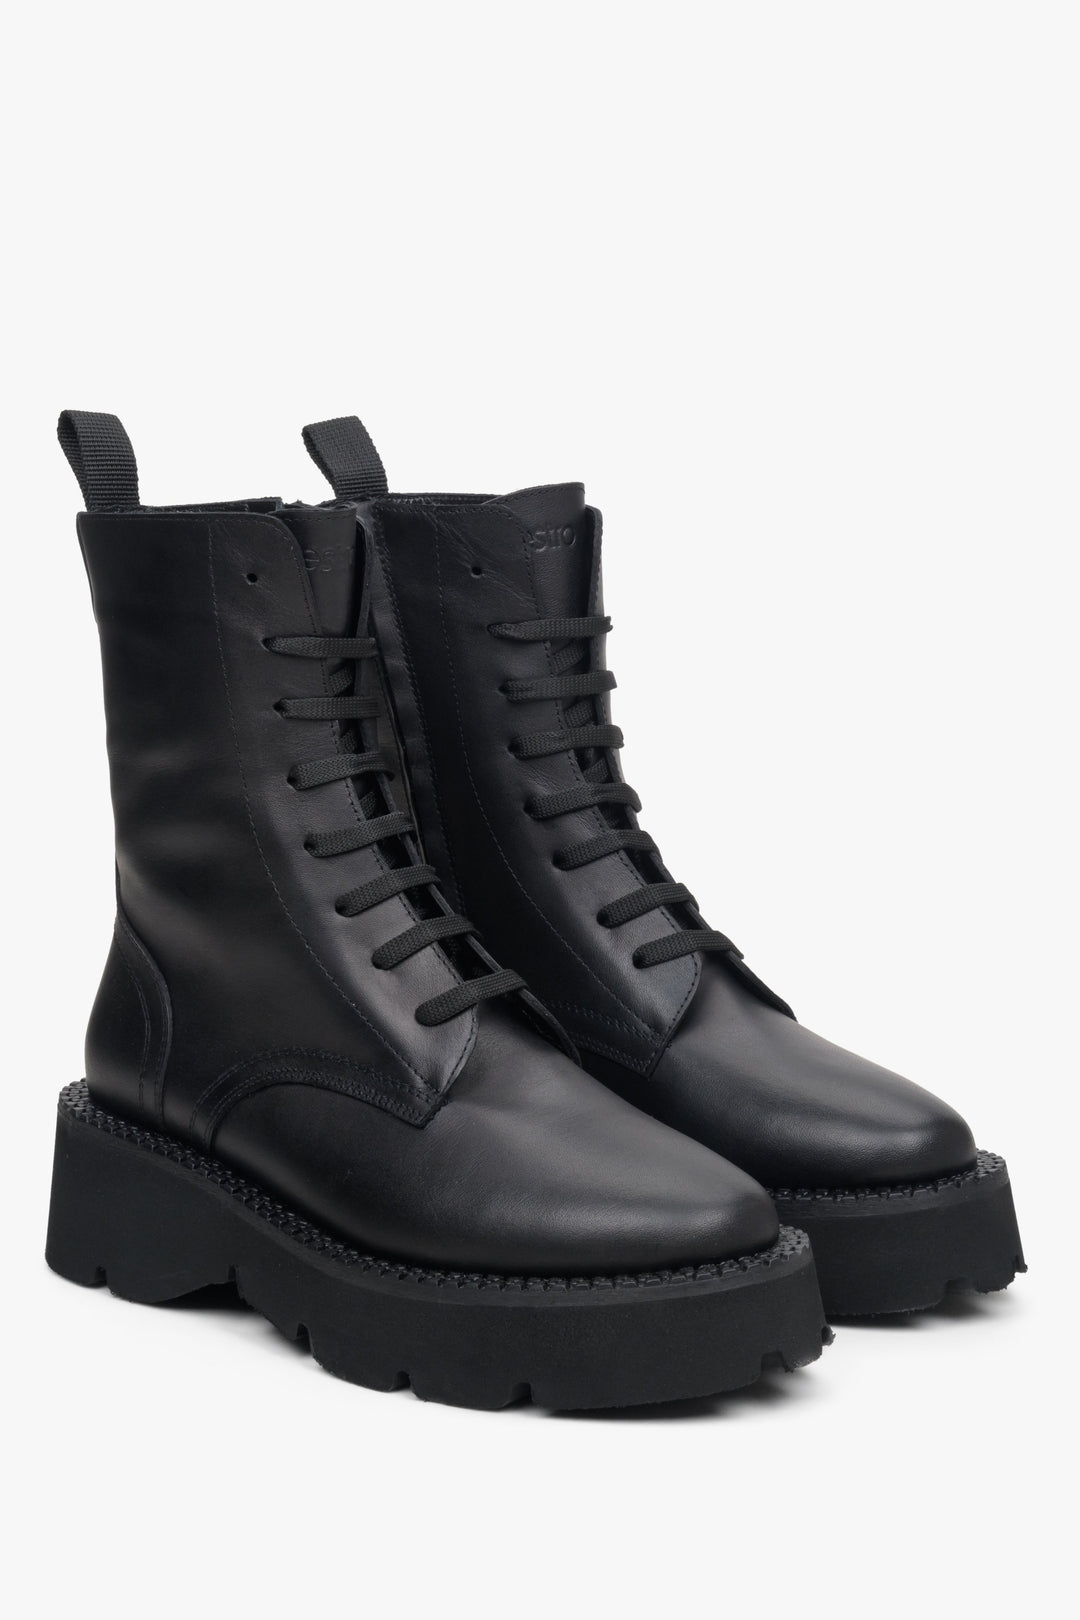 Women's black leather  boots by Estro.